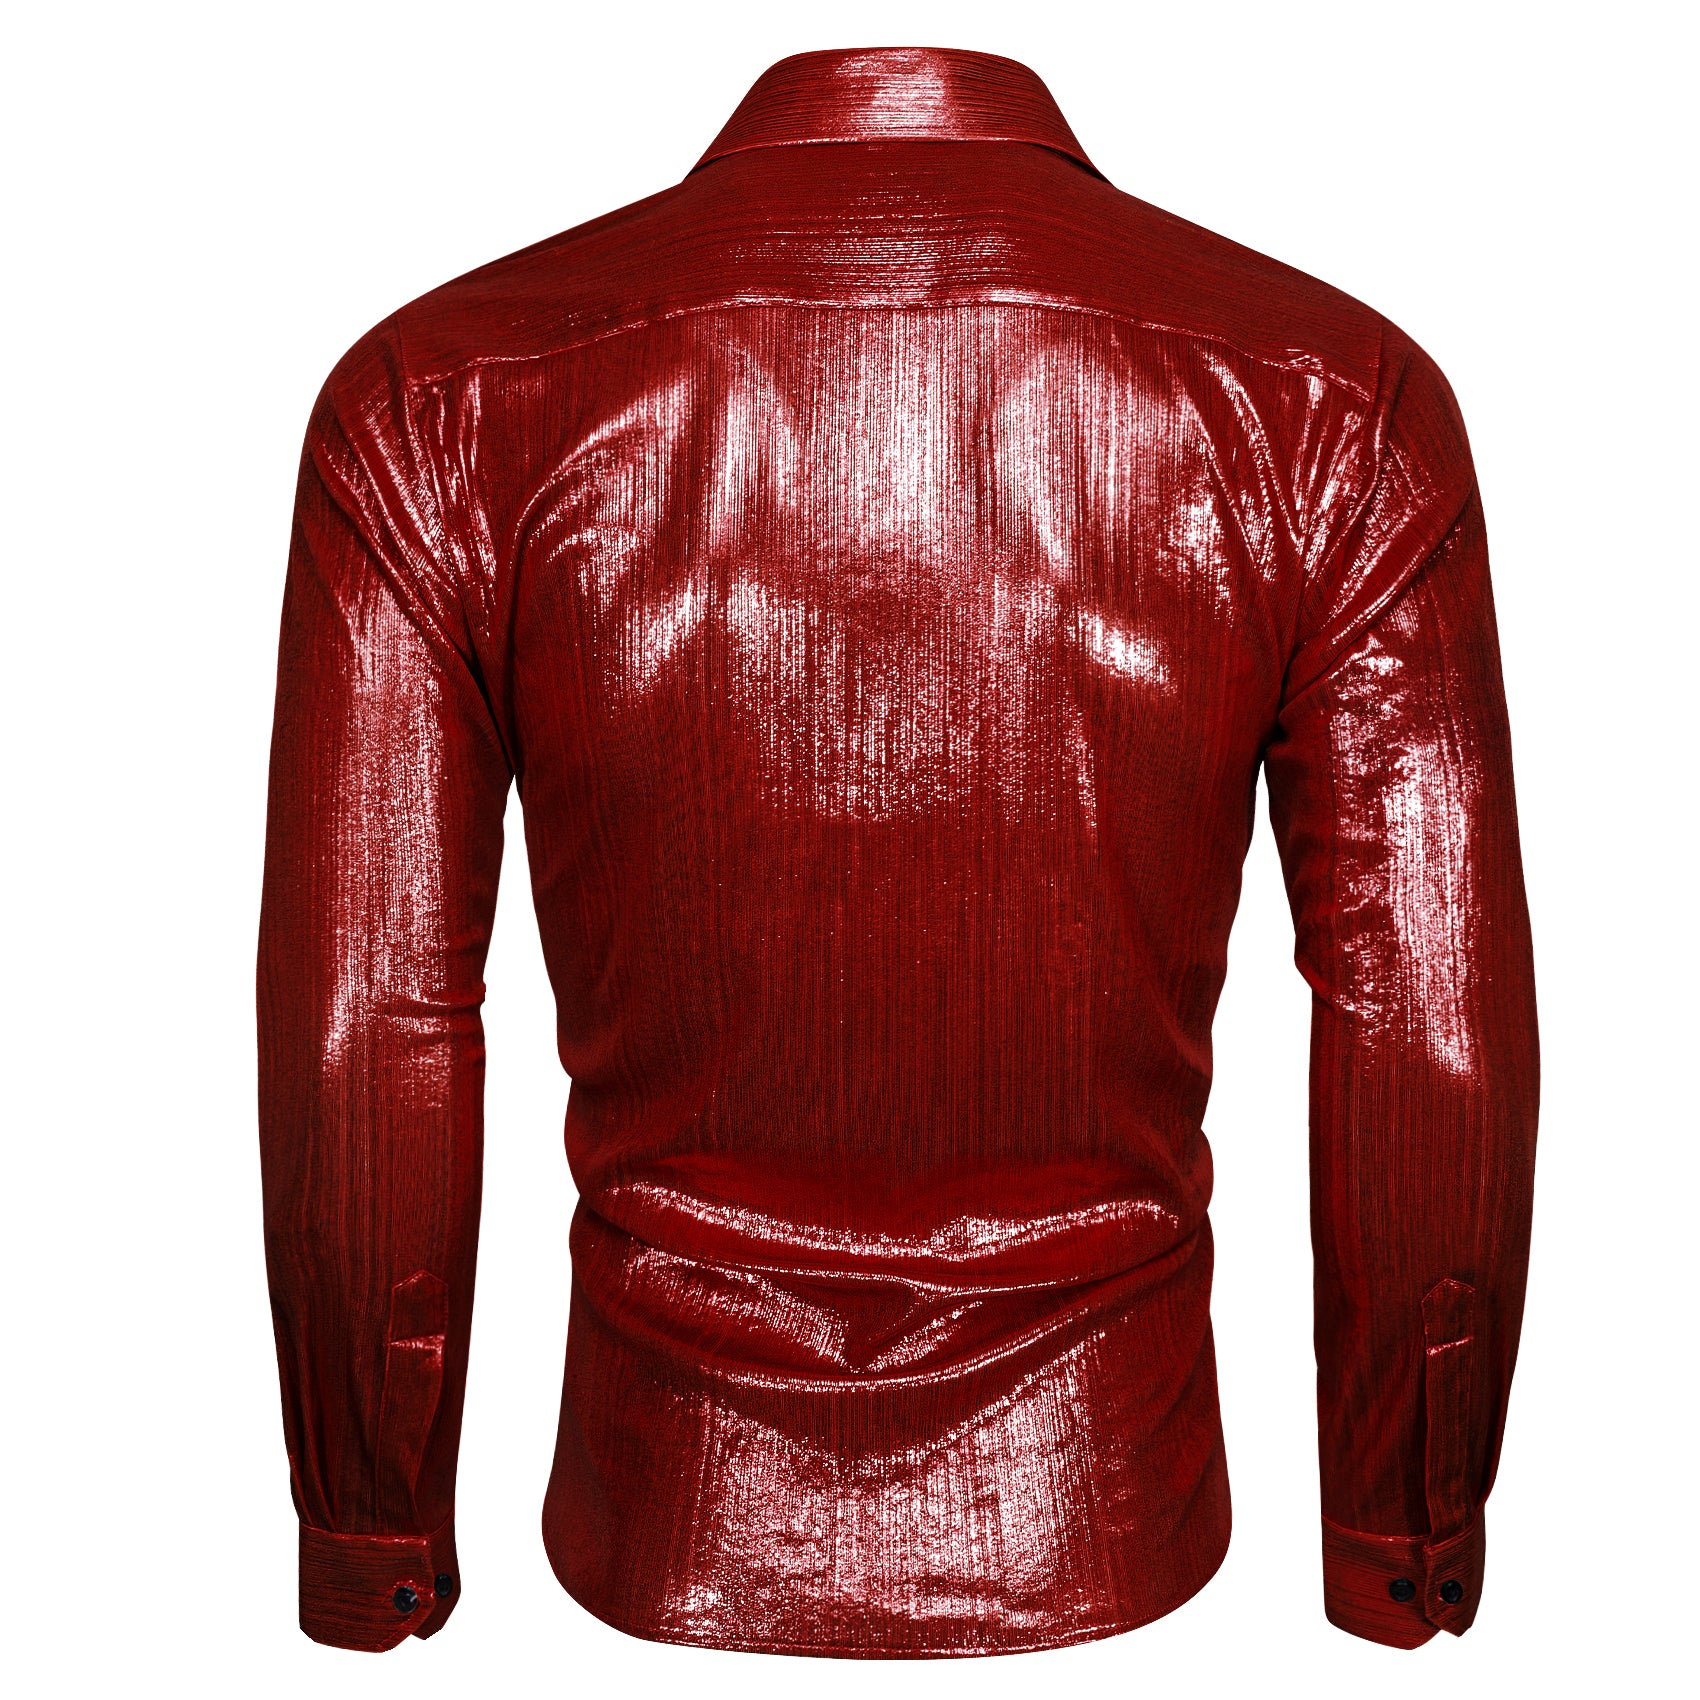 Barry.wang Brick Red Solid Silk Shirt